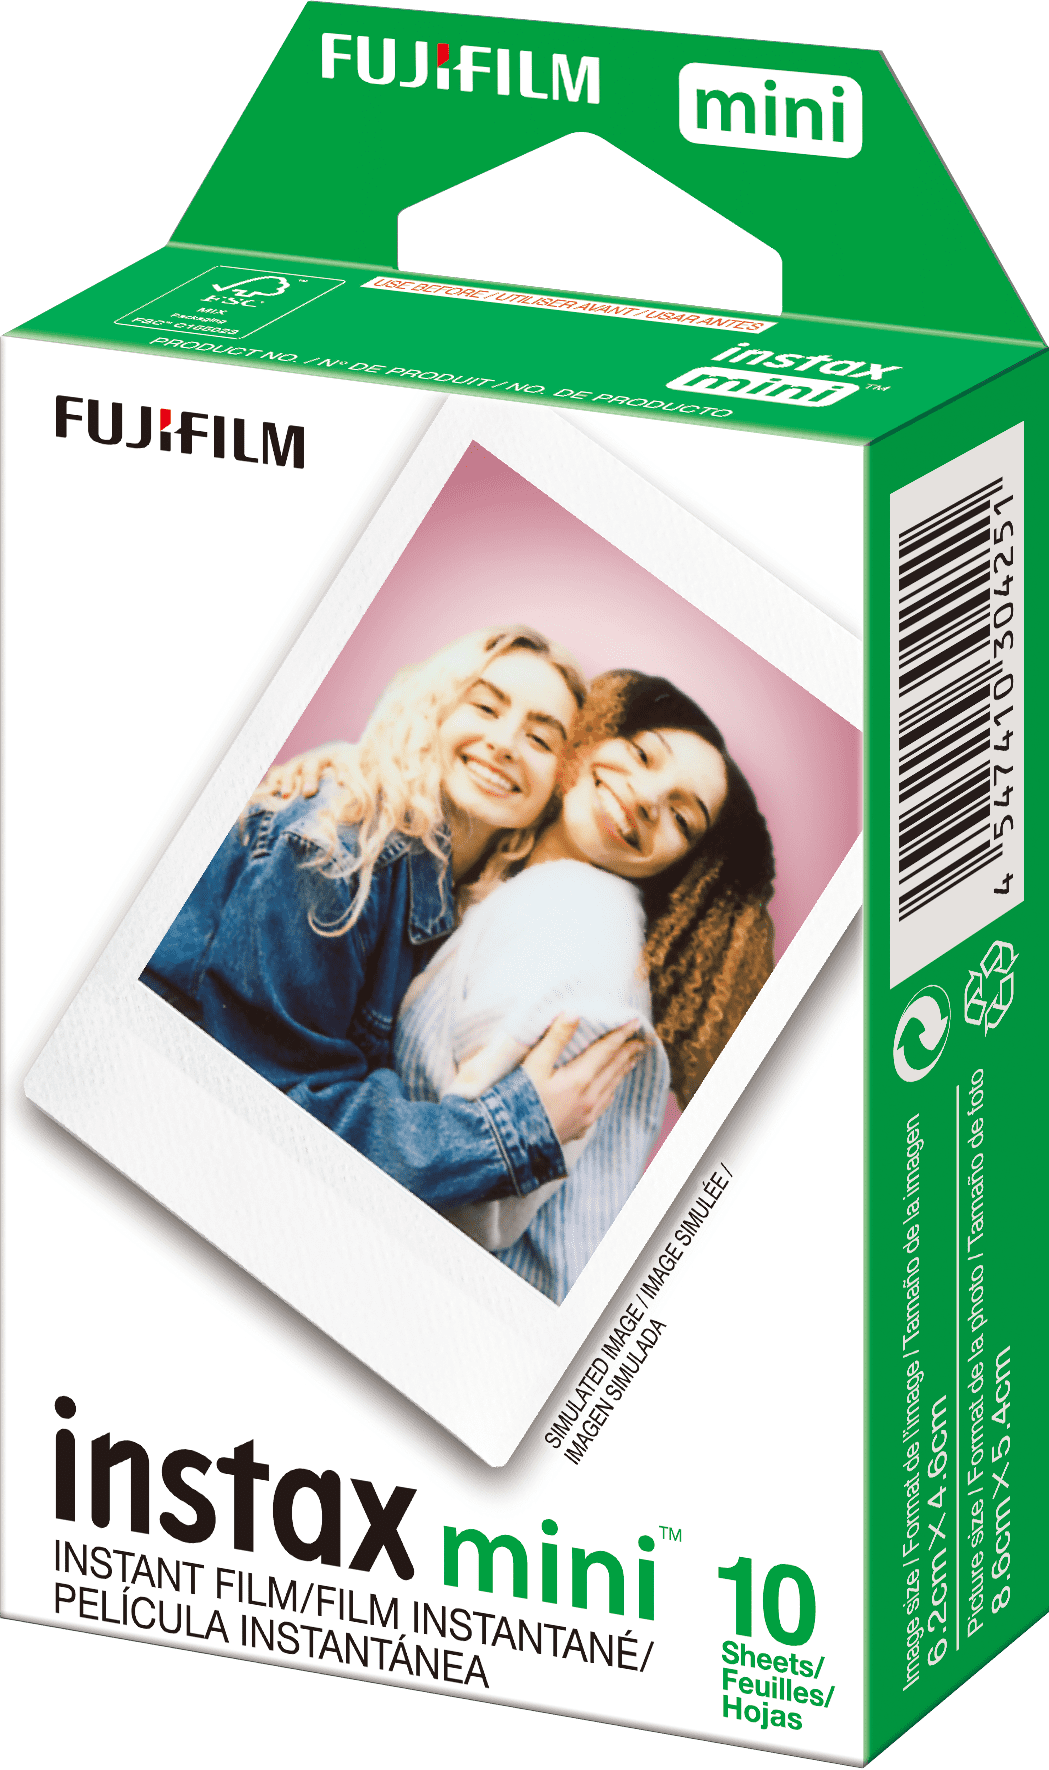 Fujifilm INSTAX Mini 7+ Exclusive Blister Bundle with Bonus Pack of Film (10 -pack Mini Film), Gray 